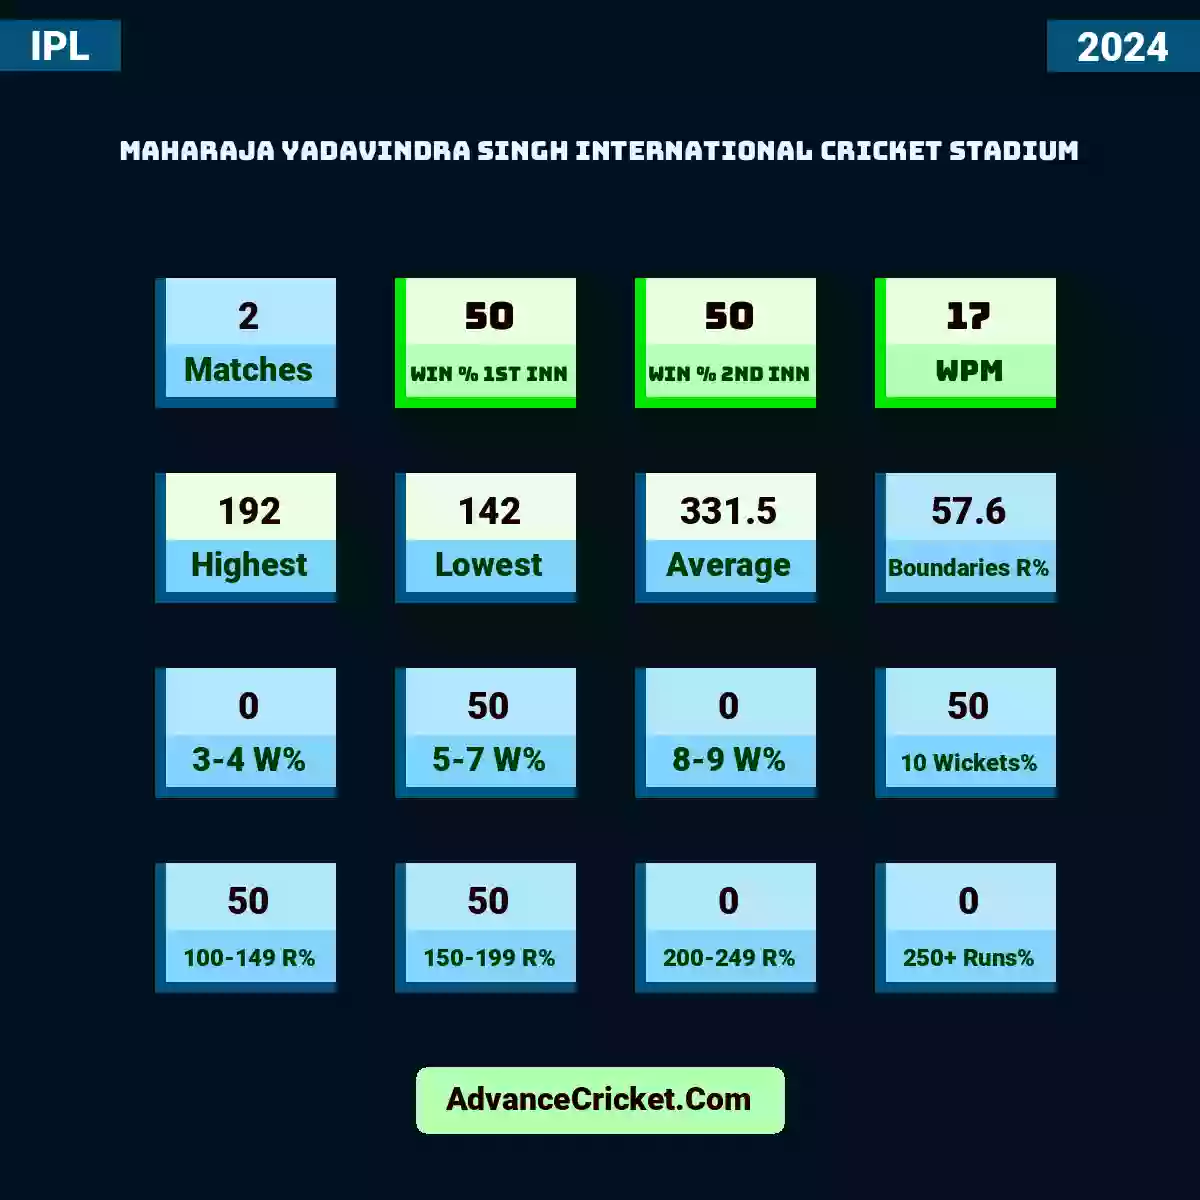 Image showing Maharaja Yadavindra Singh International Cricket Stadium IPL 2024 with Matches: 2, Win % 1st Inn: 50, Win % 2nd Inn: 50, WPM: 17, Highest: 192, Lowest: 142, Average: 331.5, Boundaries R%: 57.6, 3-4 W%: 0, 5-7 W%: 50, 8-9 W%: 0, 10 Wickets%: 50, 100-149 R%: 50, 150-199 R%: 50, 200-249 R%